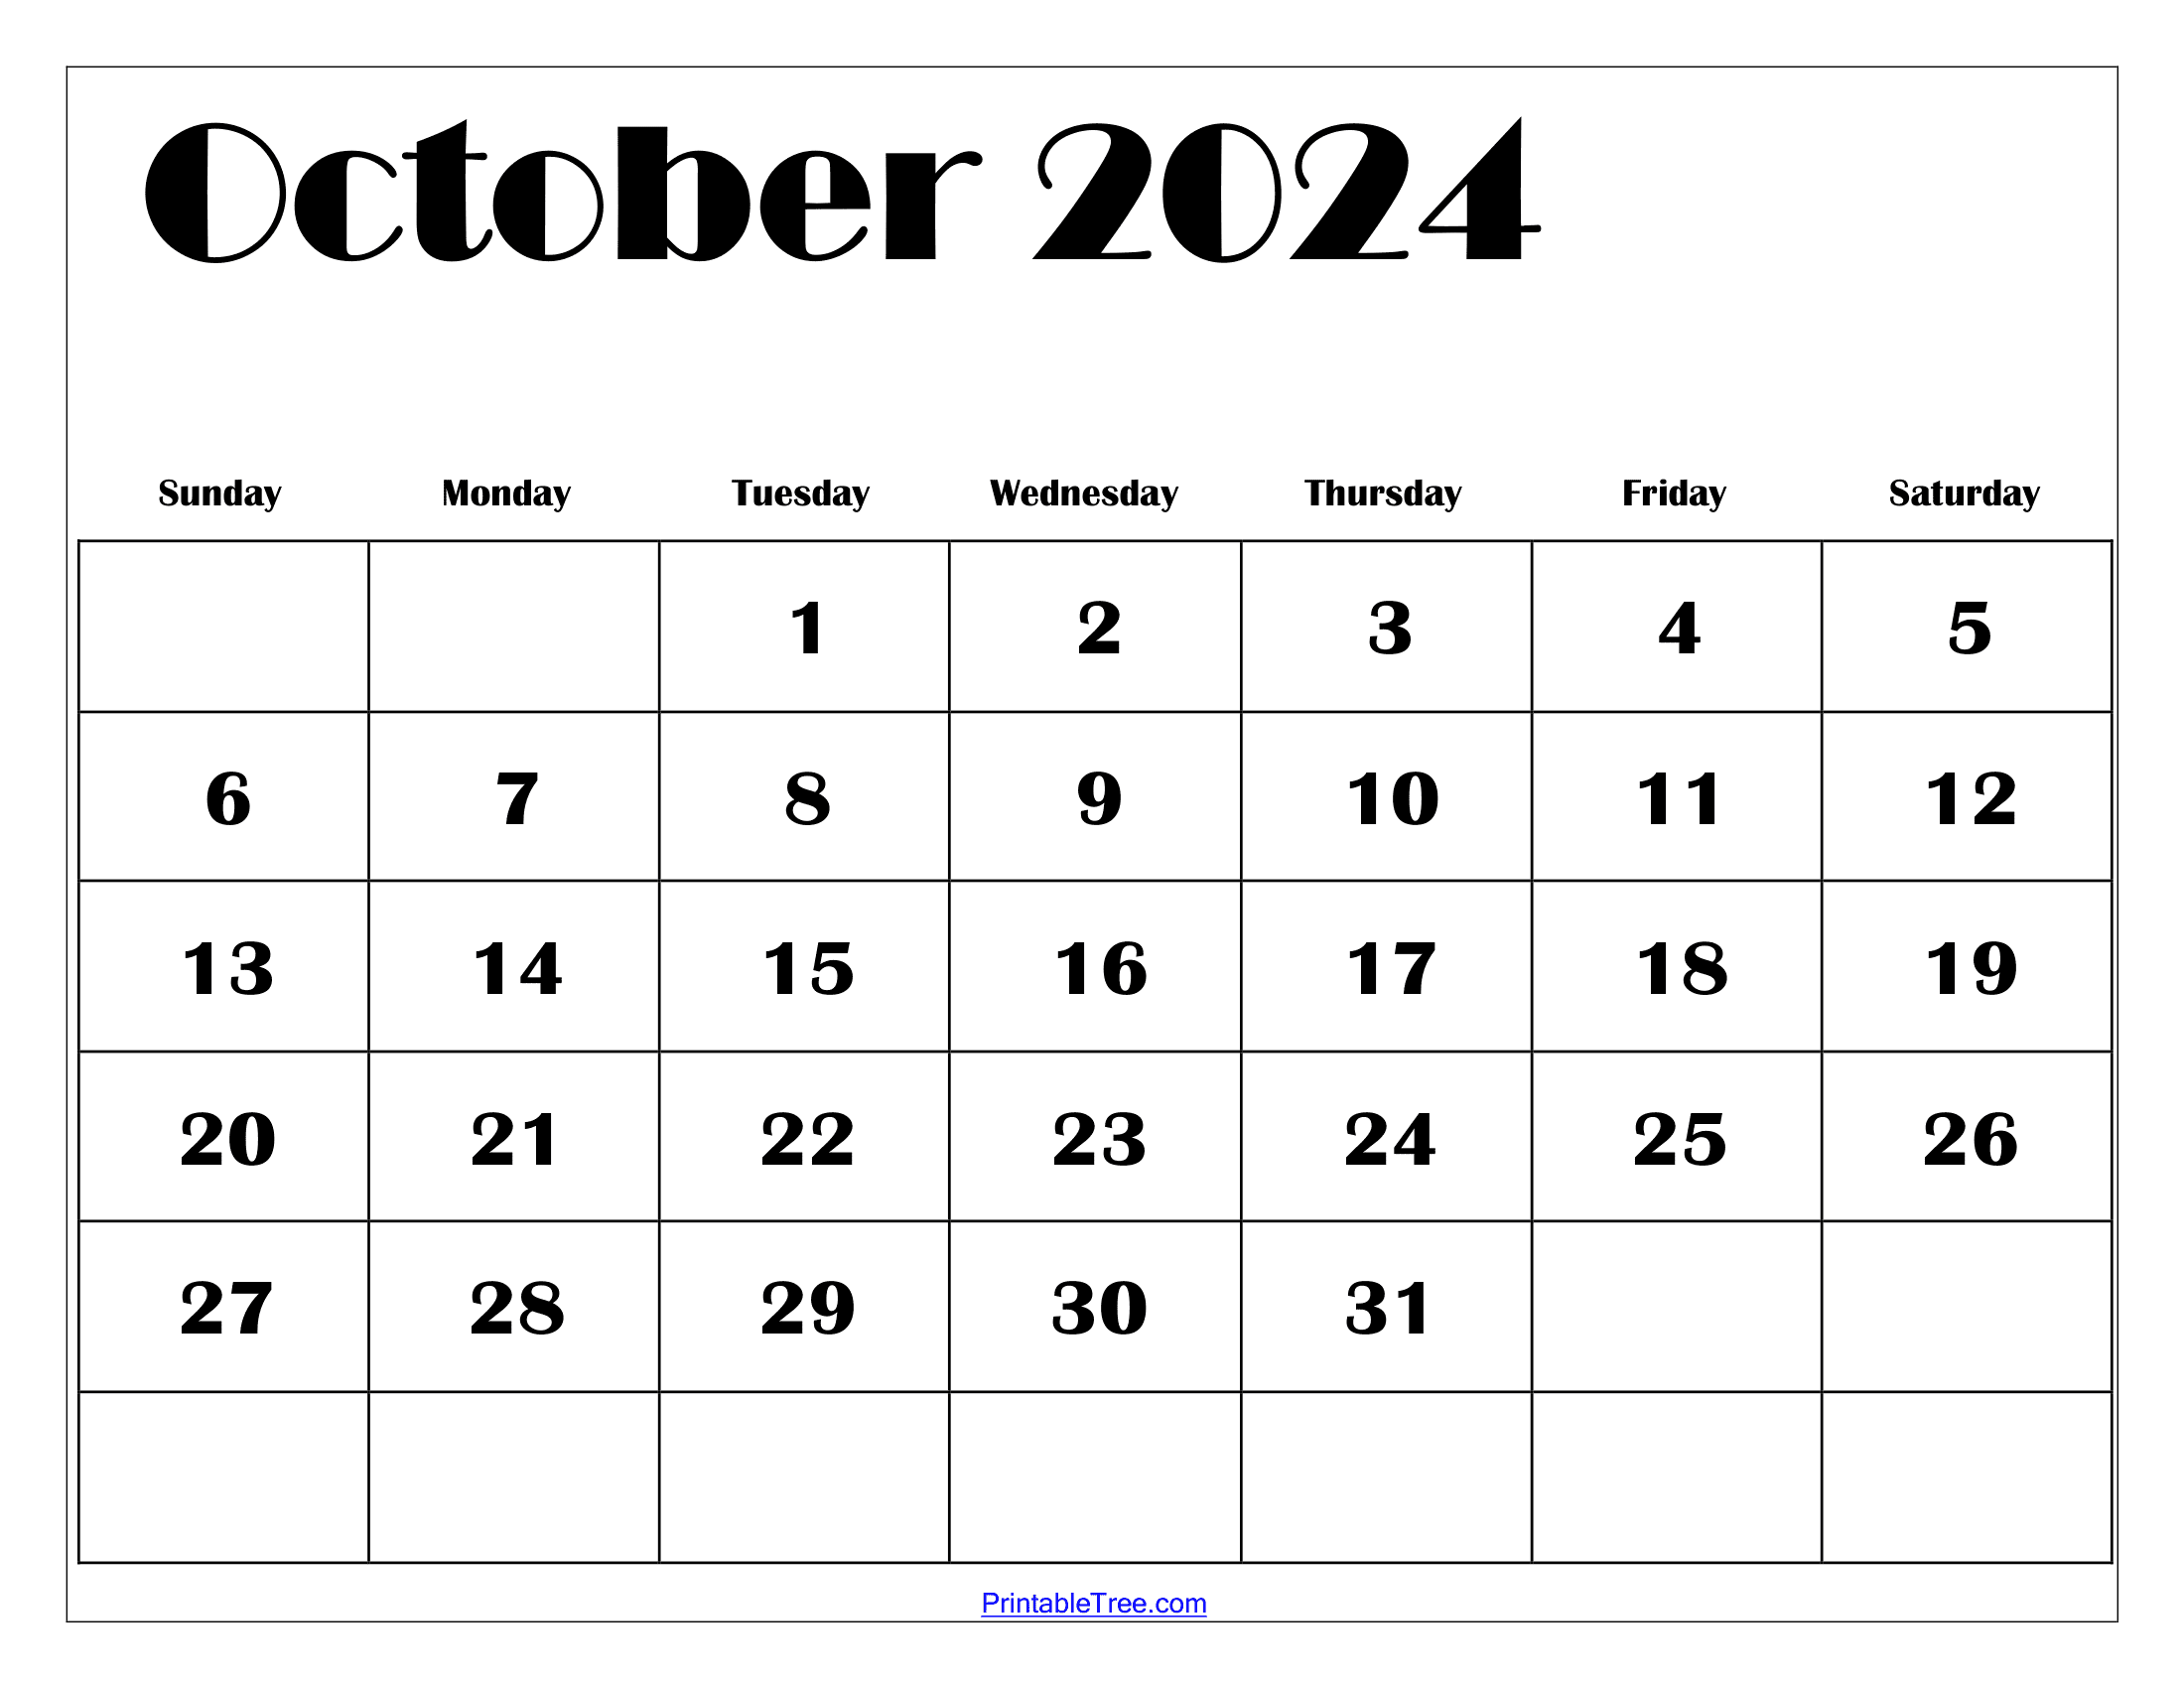 October 2024 Calendar Printable Pdf Free Templates With Holidays for Oct 2024 Calendar Printable